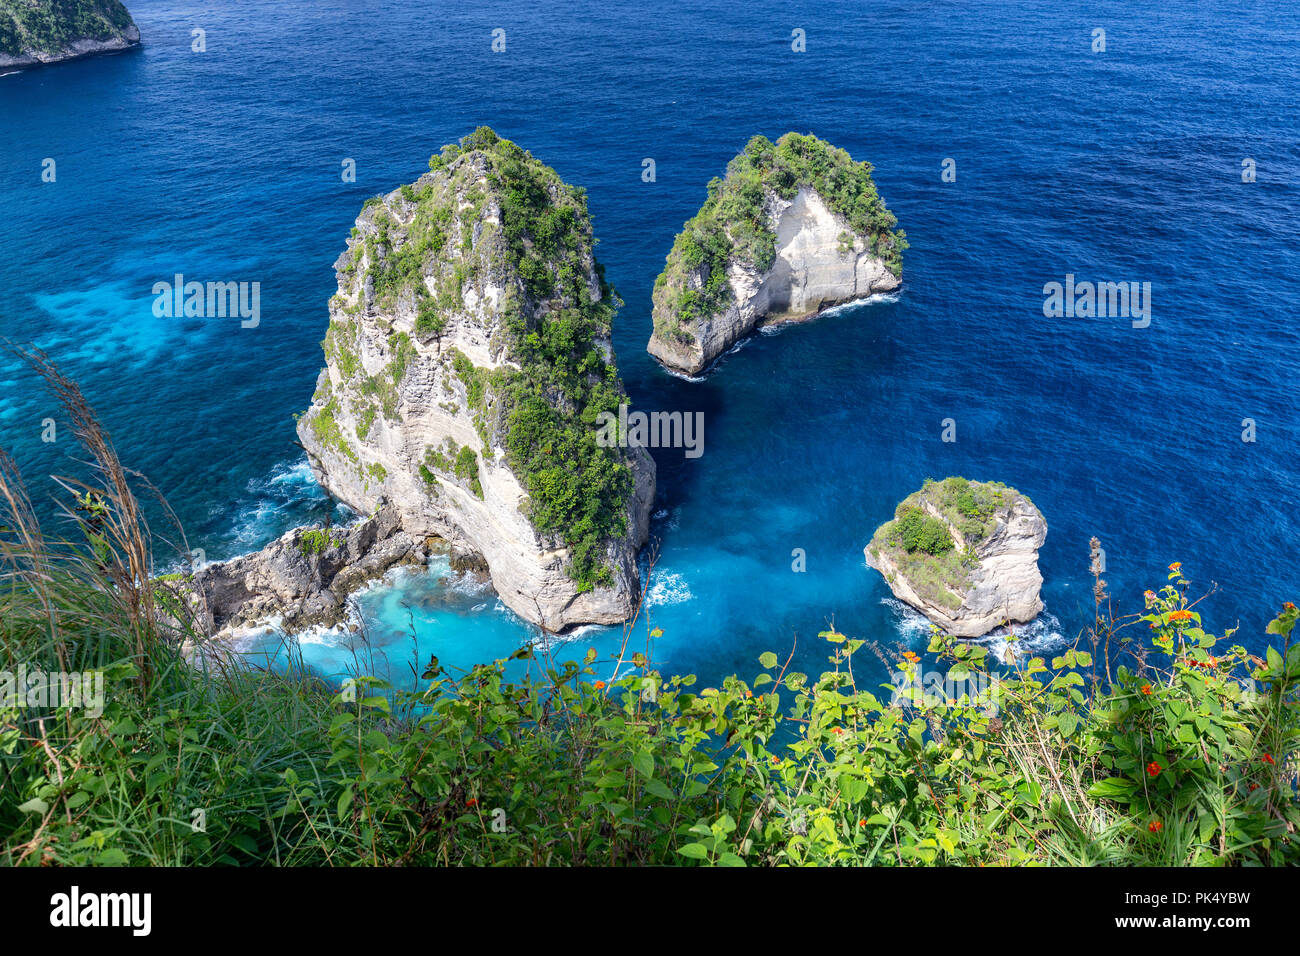 Tiny islands, part of the Raja Lima islands off the coast of Nusa Penida in Indonesia. Stock Photo